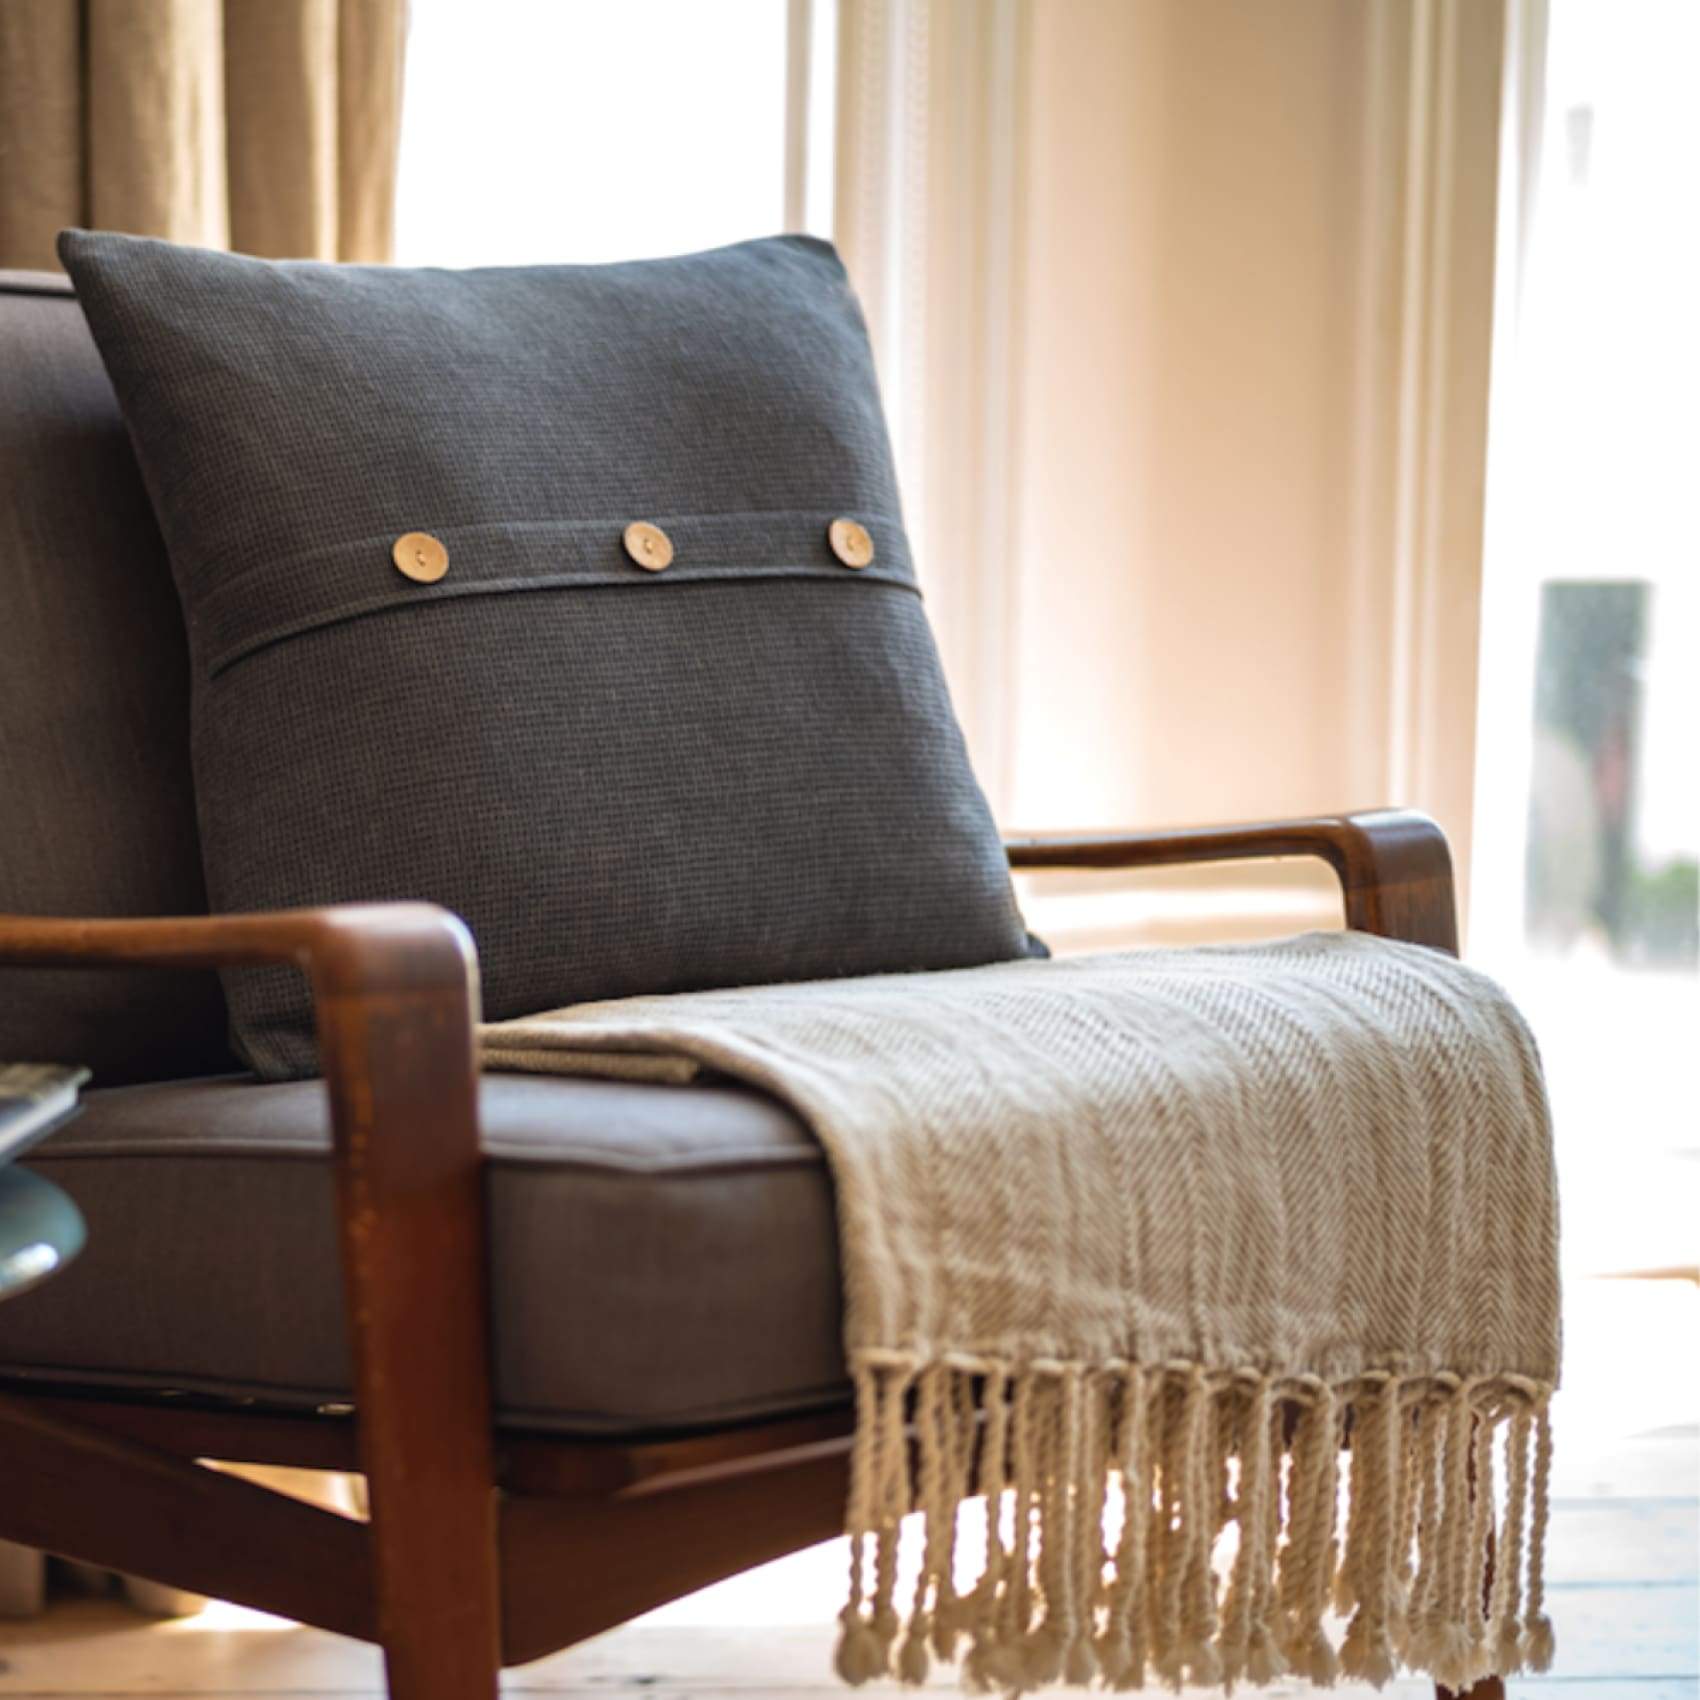 ev-linen-and-cotton-blanket-luks-furniture-chair-room-129.jpg